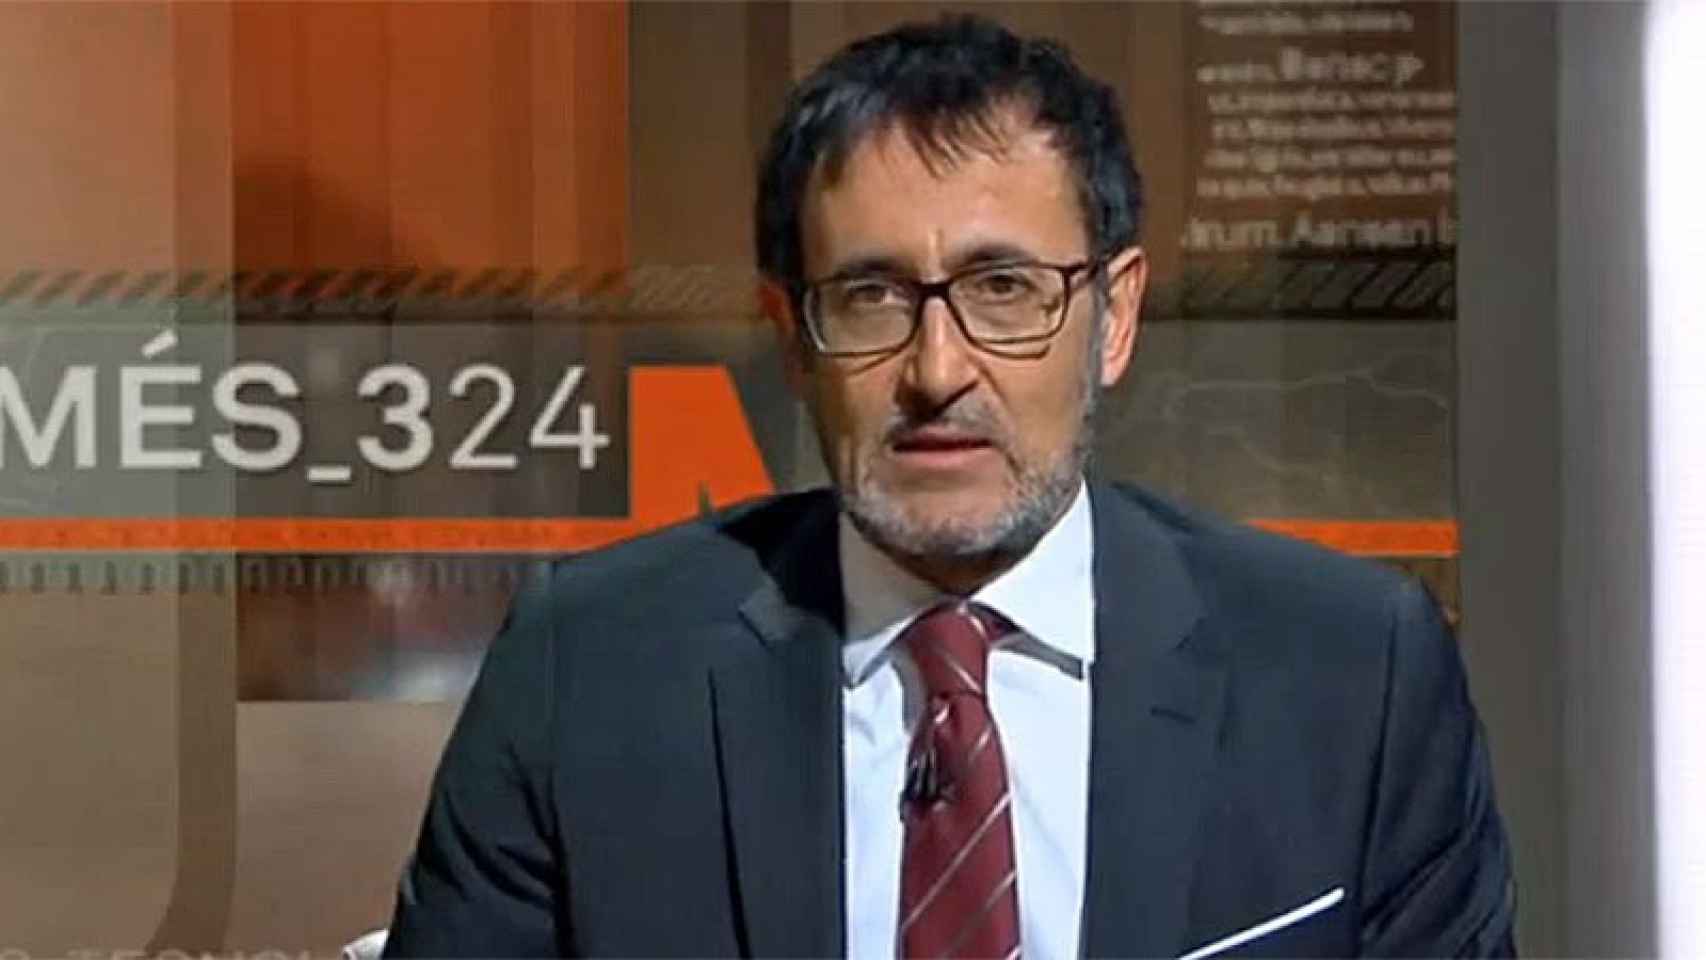 Xavier Graset, director y presentador del programa 'Més 324' de Televisió de Catalunya